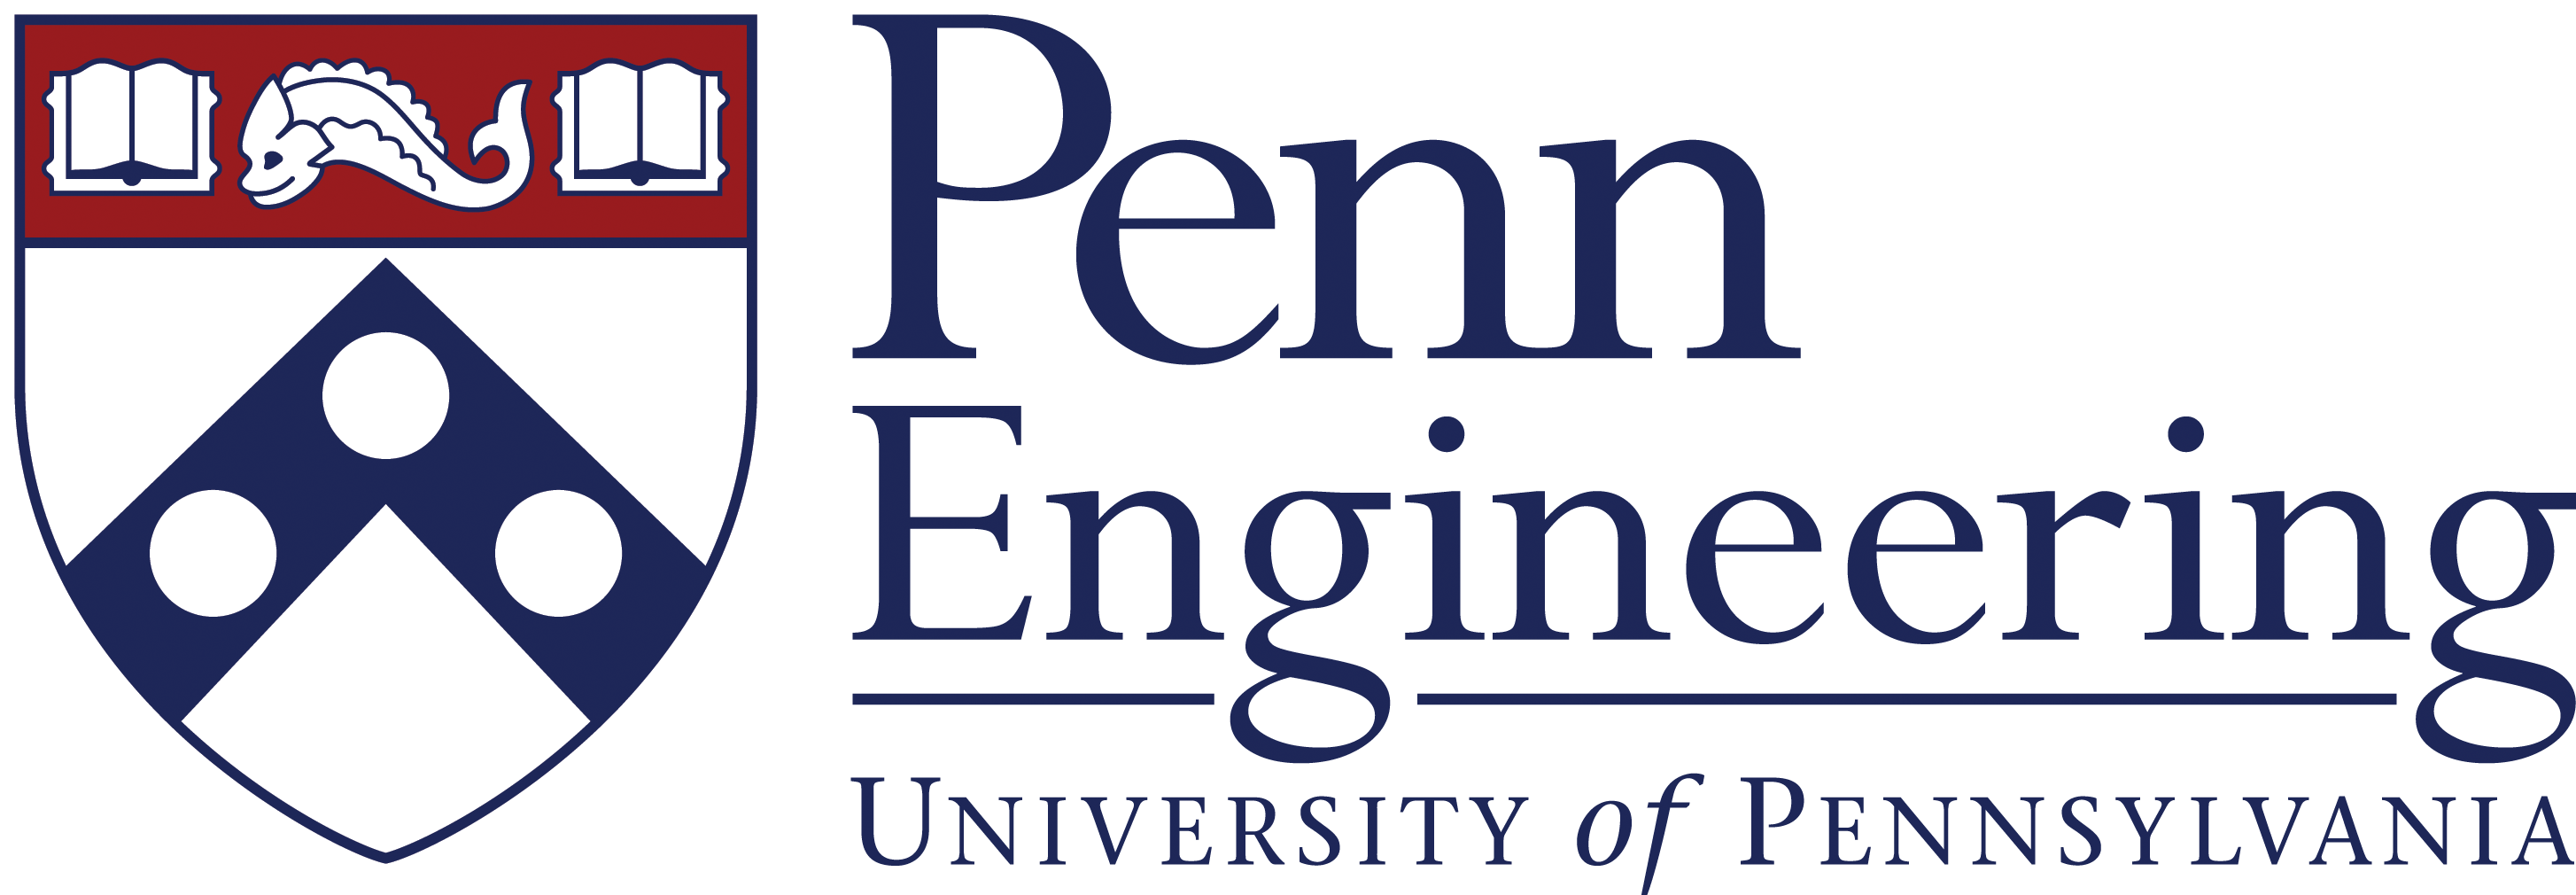 University of Pennsylvania School of Engineering Applied Sciences logo